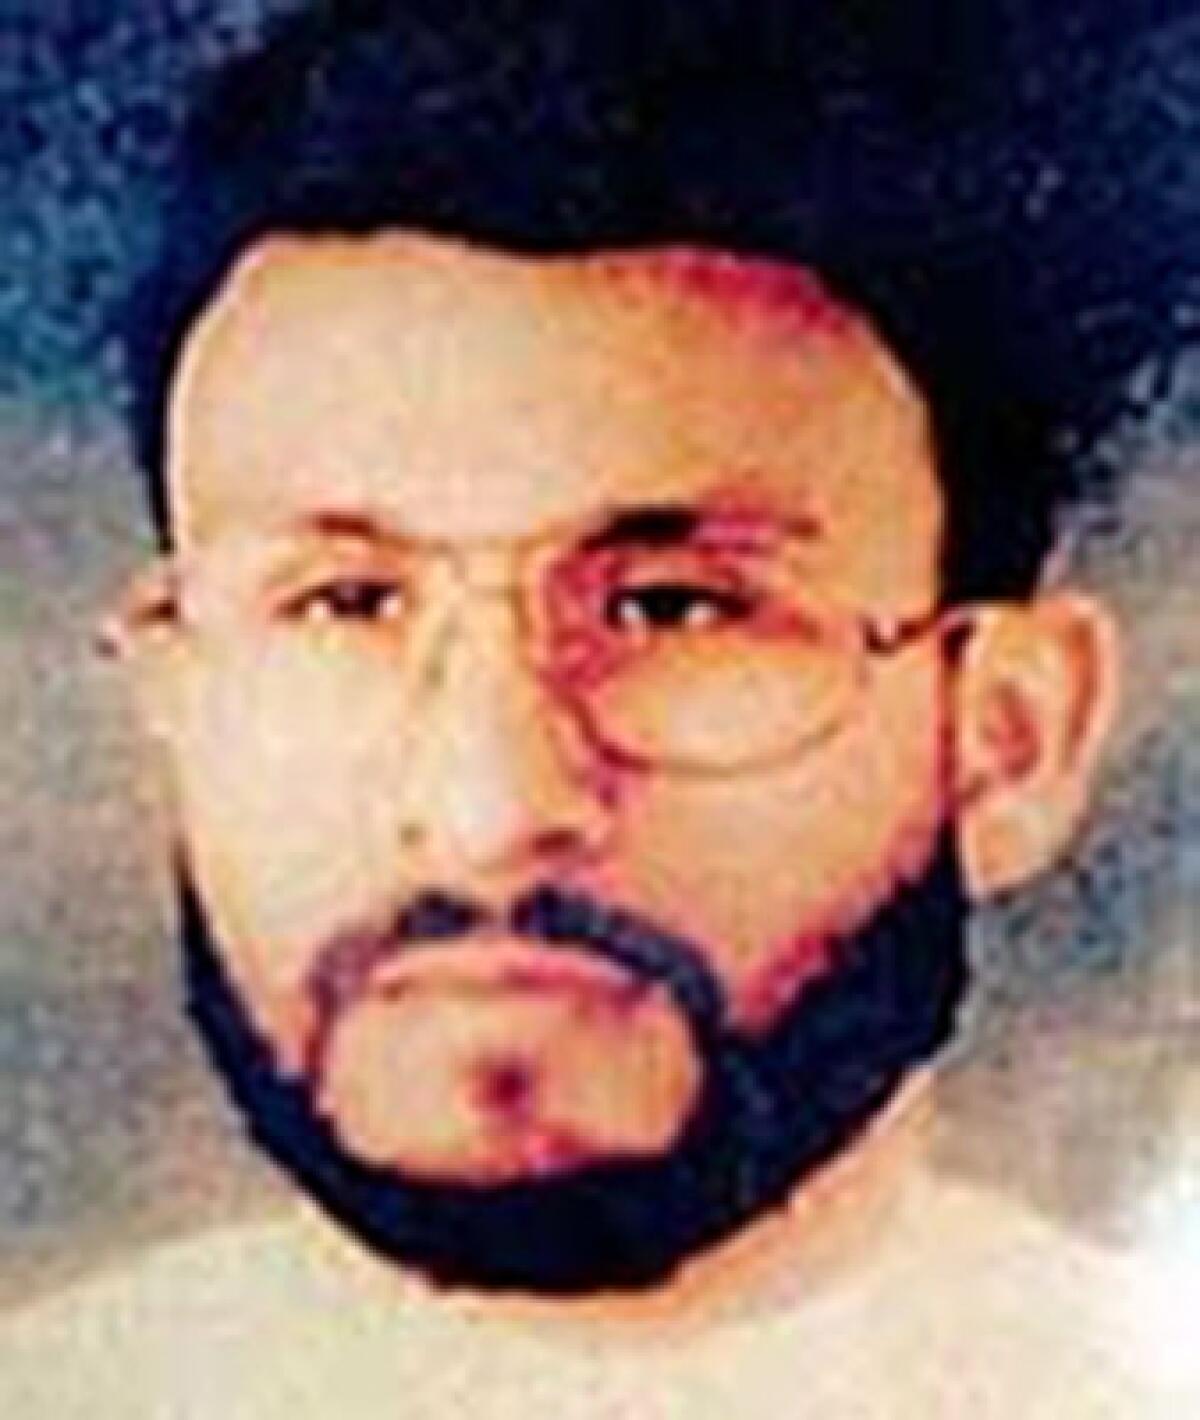 Al Qaeda suspect Abu Zubaydah is shown in a photo provided by U.S. Central Command.